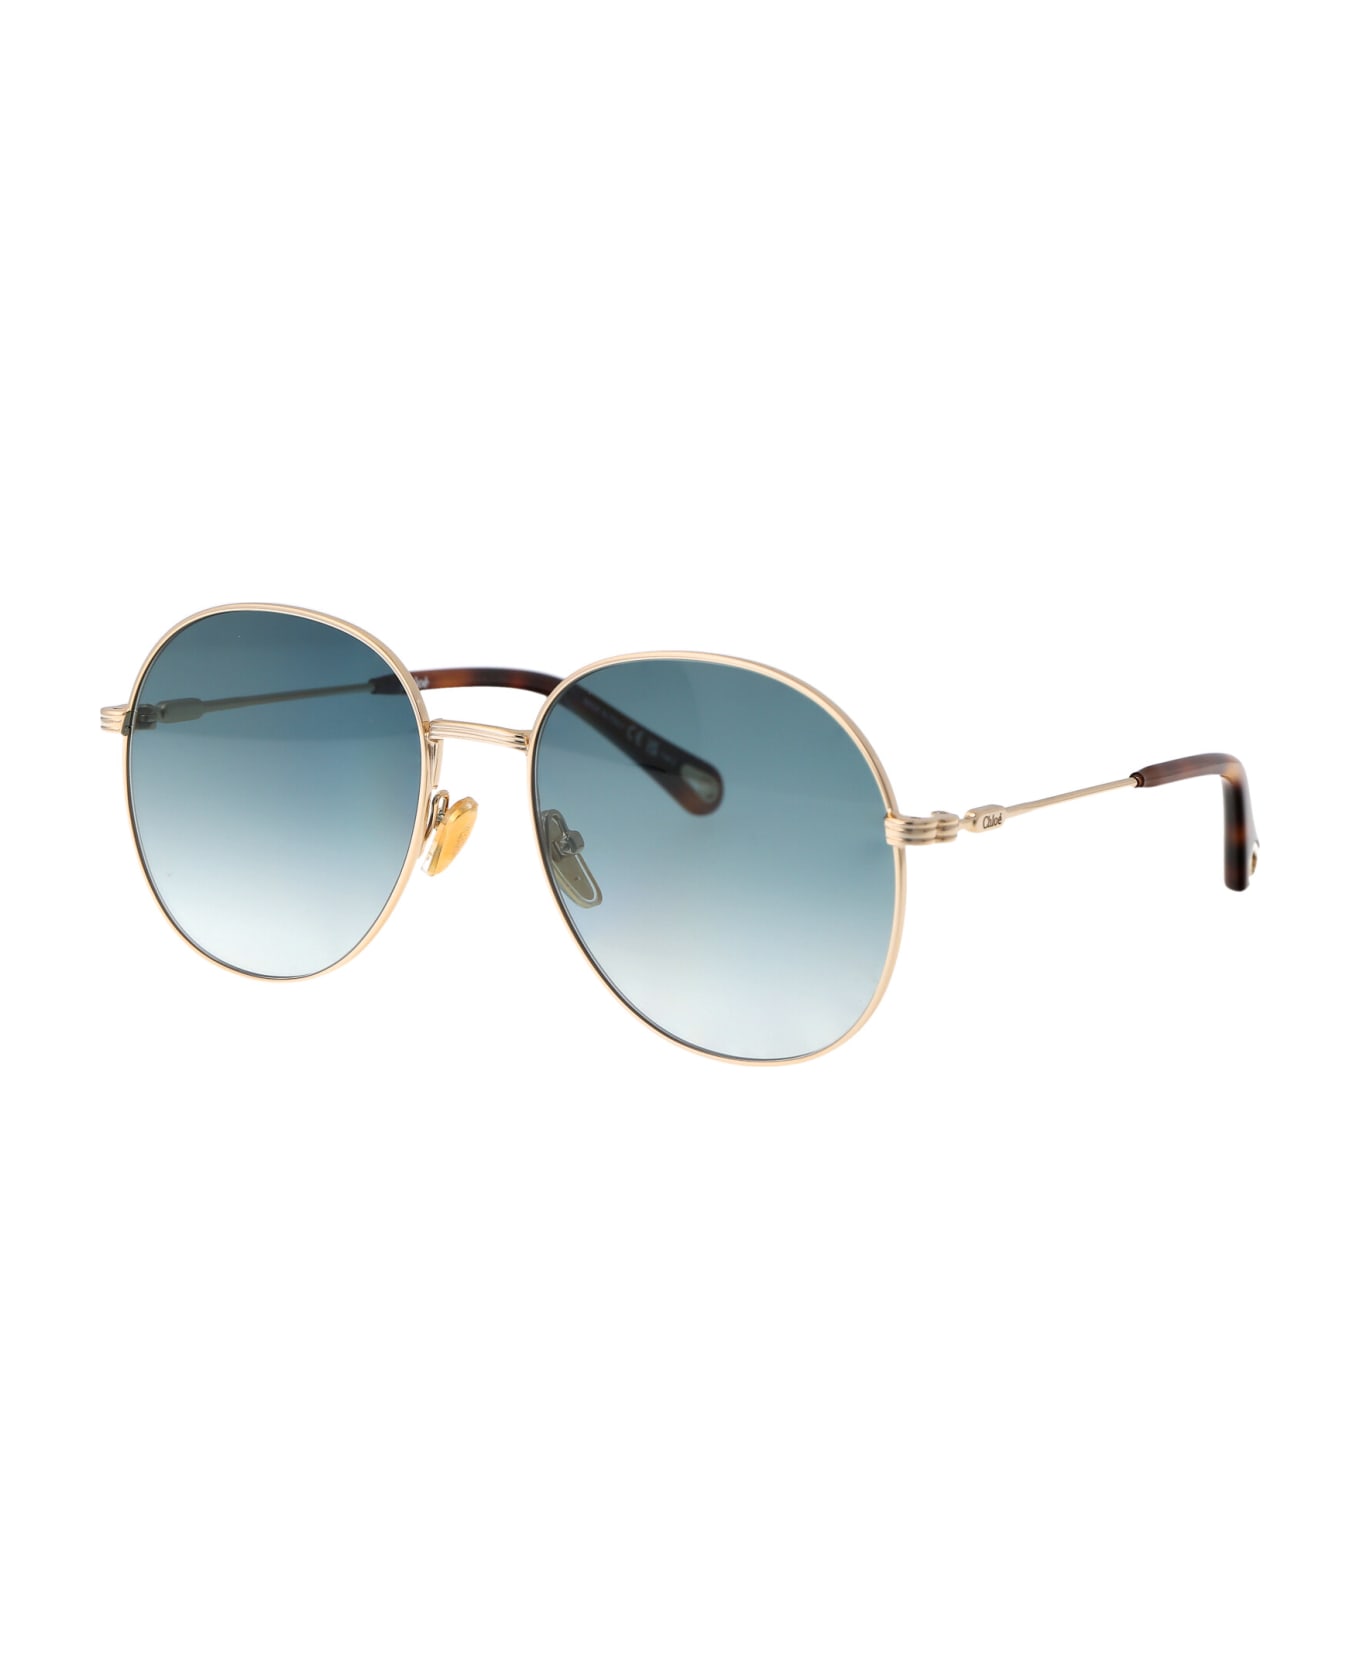 Chloé Eyewear Ch0178s Sunglasses - 004 GOLD GOLD GREEN